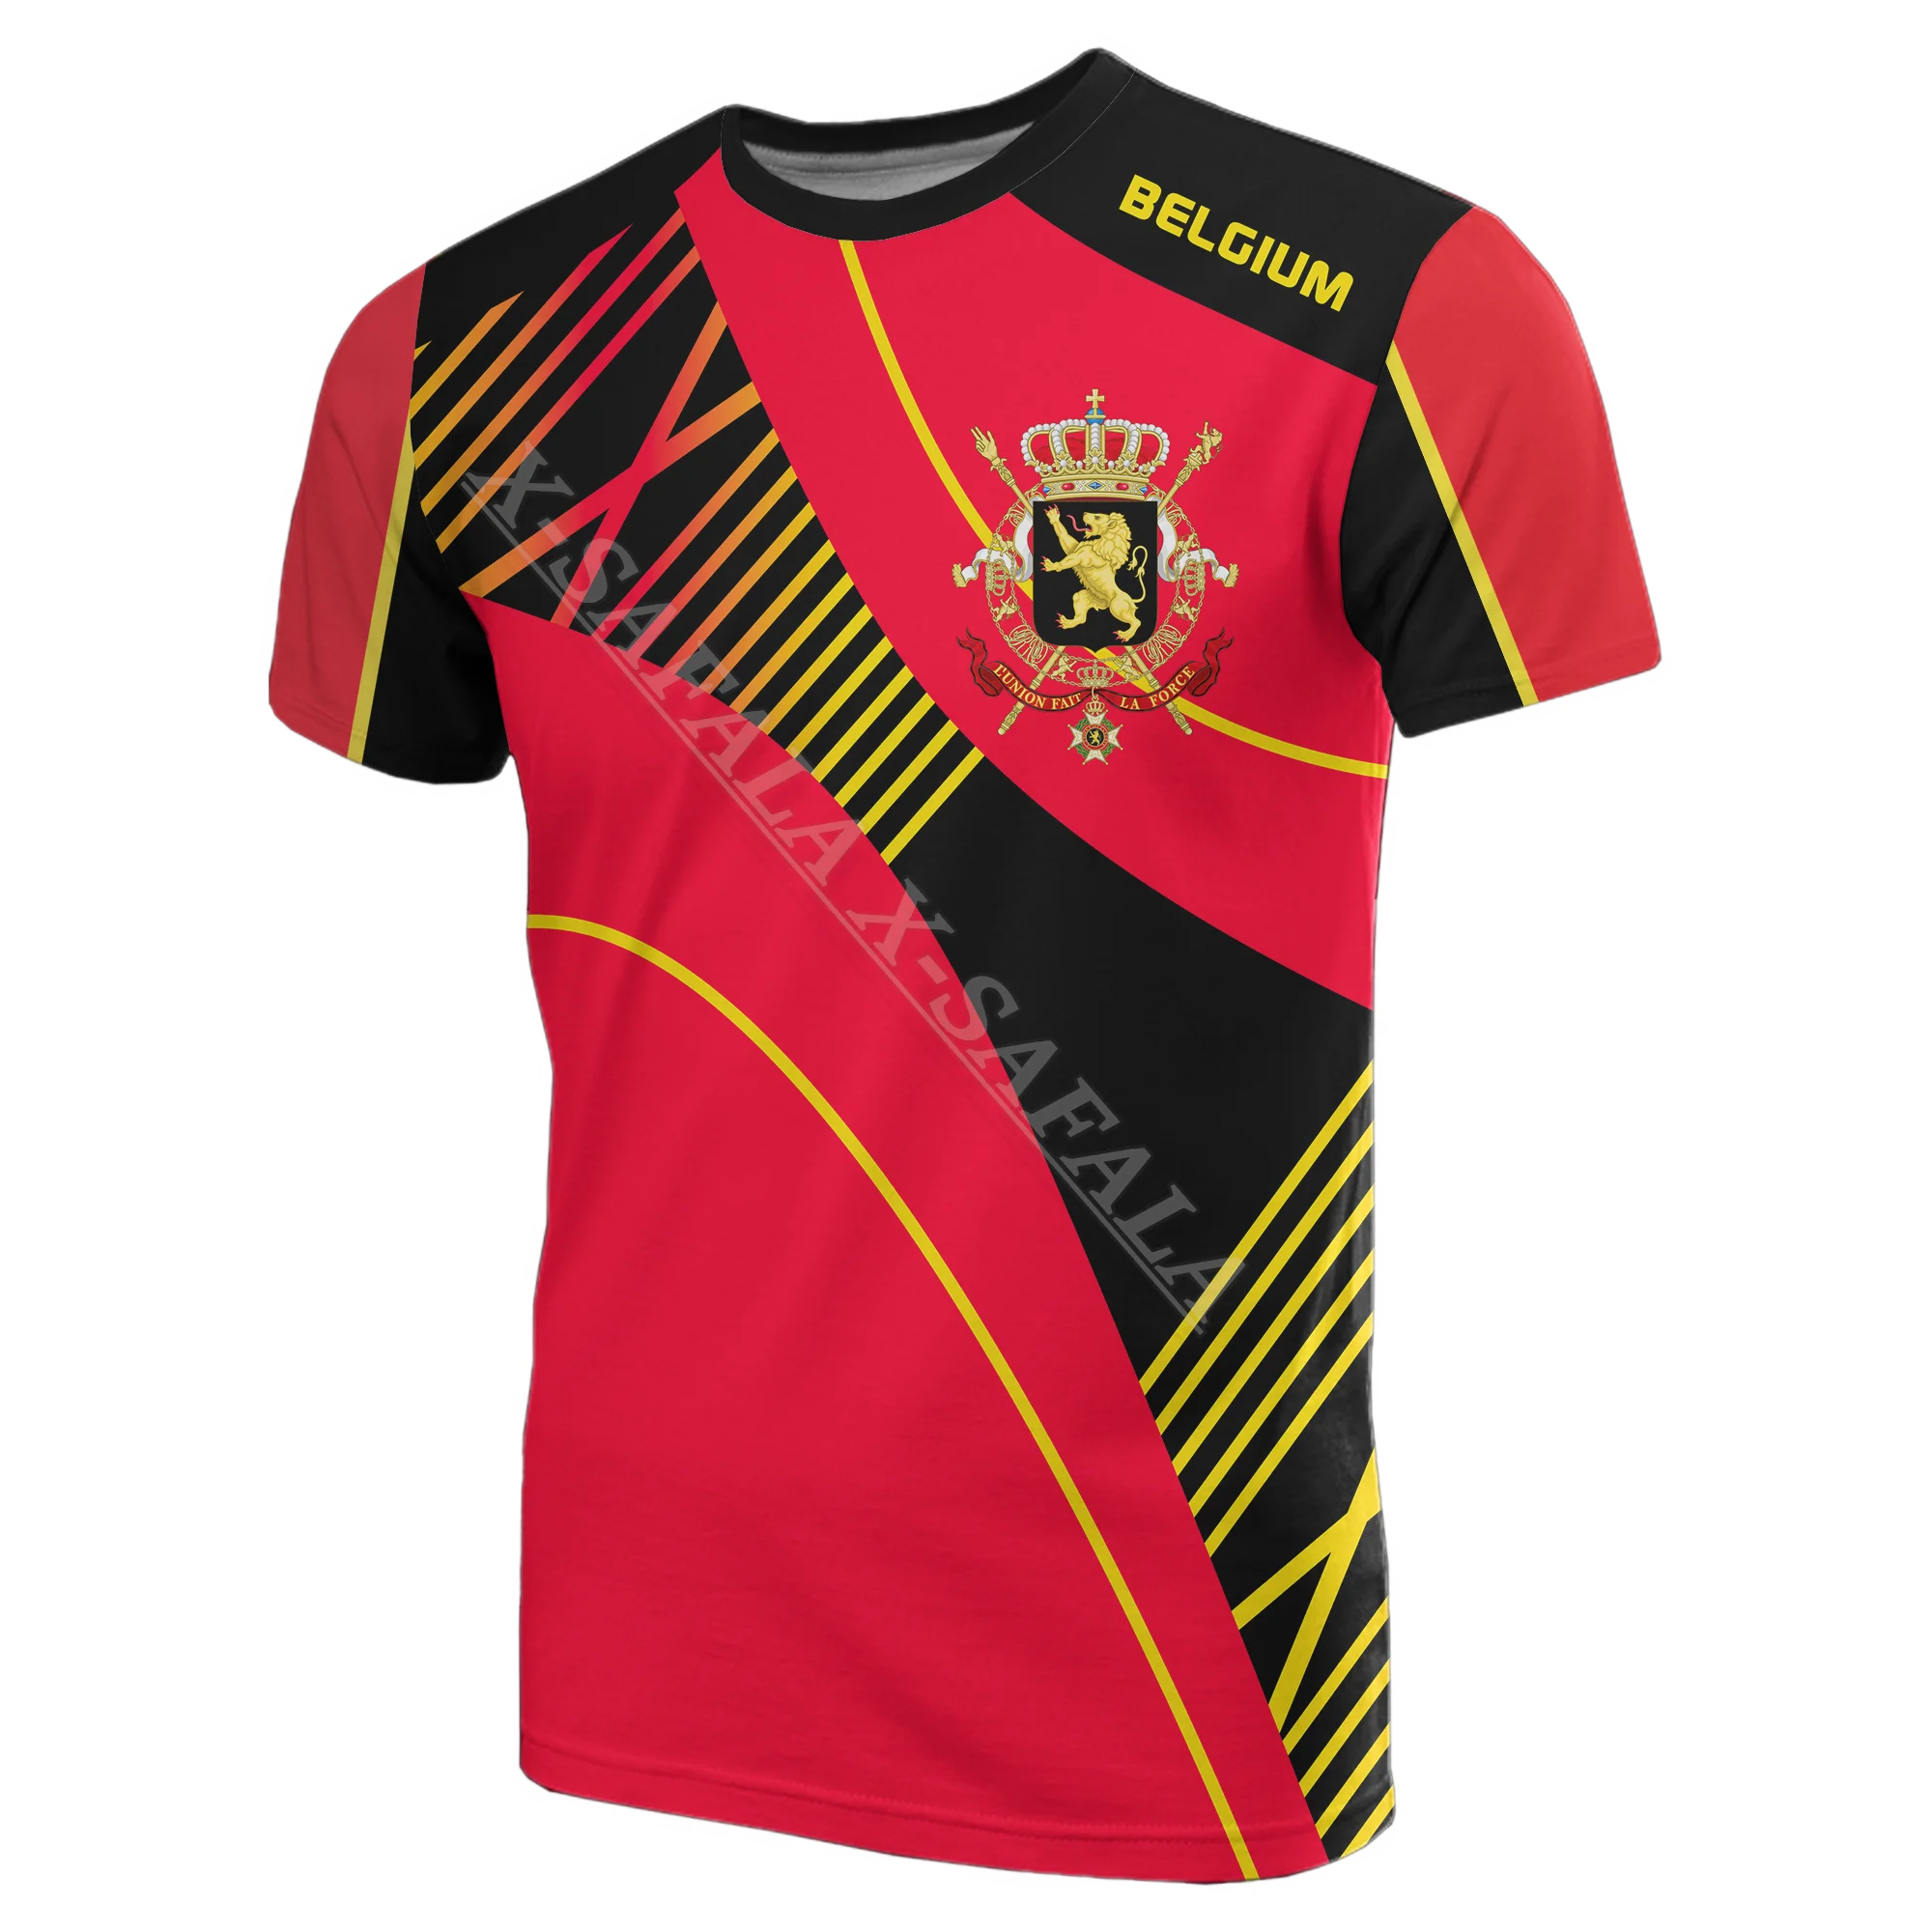 

Belgium National Flag and Emblem 3D Print Mesh Fiber T-Shirt Tops Summer Tees Men Streetwear Shorts Sleeve Sport Casual Shirt-2